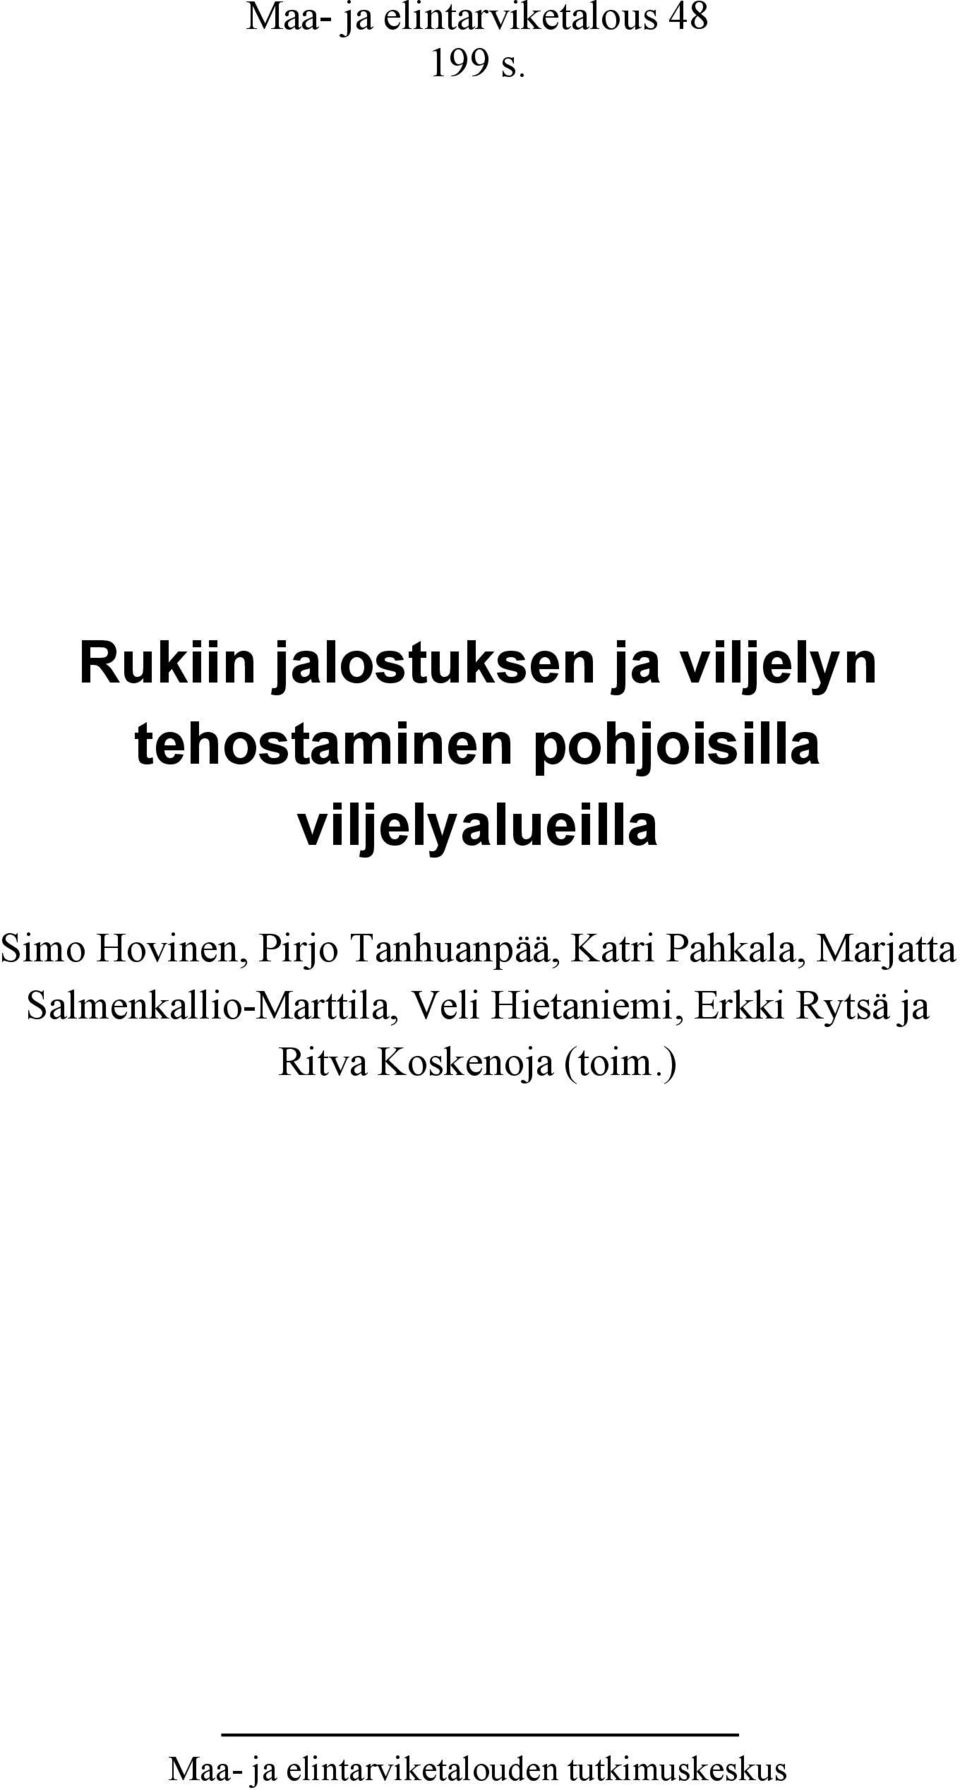 Simo Hovinen, Pirjo Tanhuanpää, Katri Pahkala, Marjatta